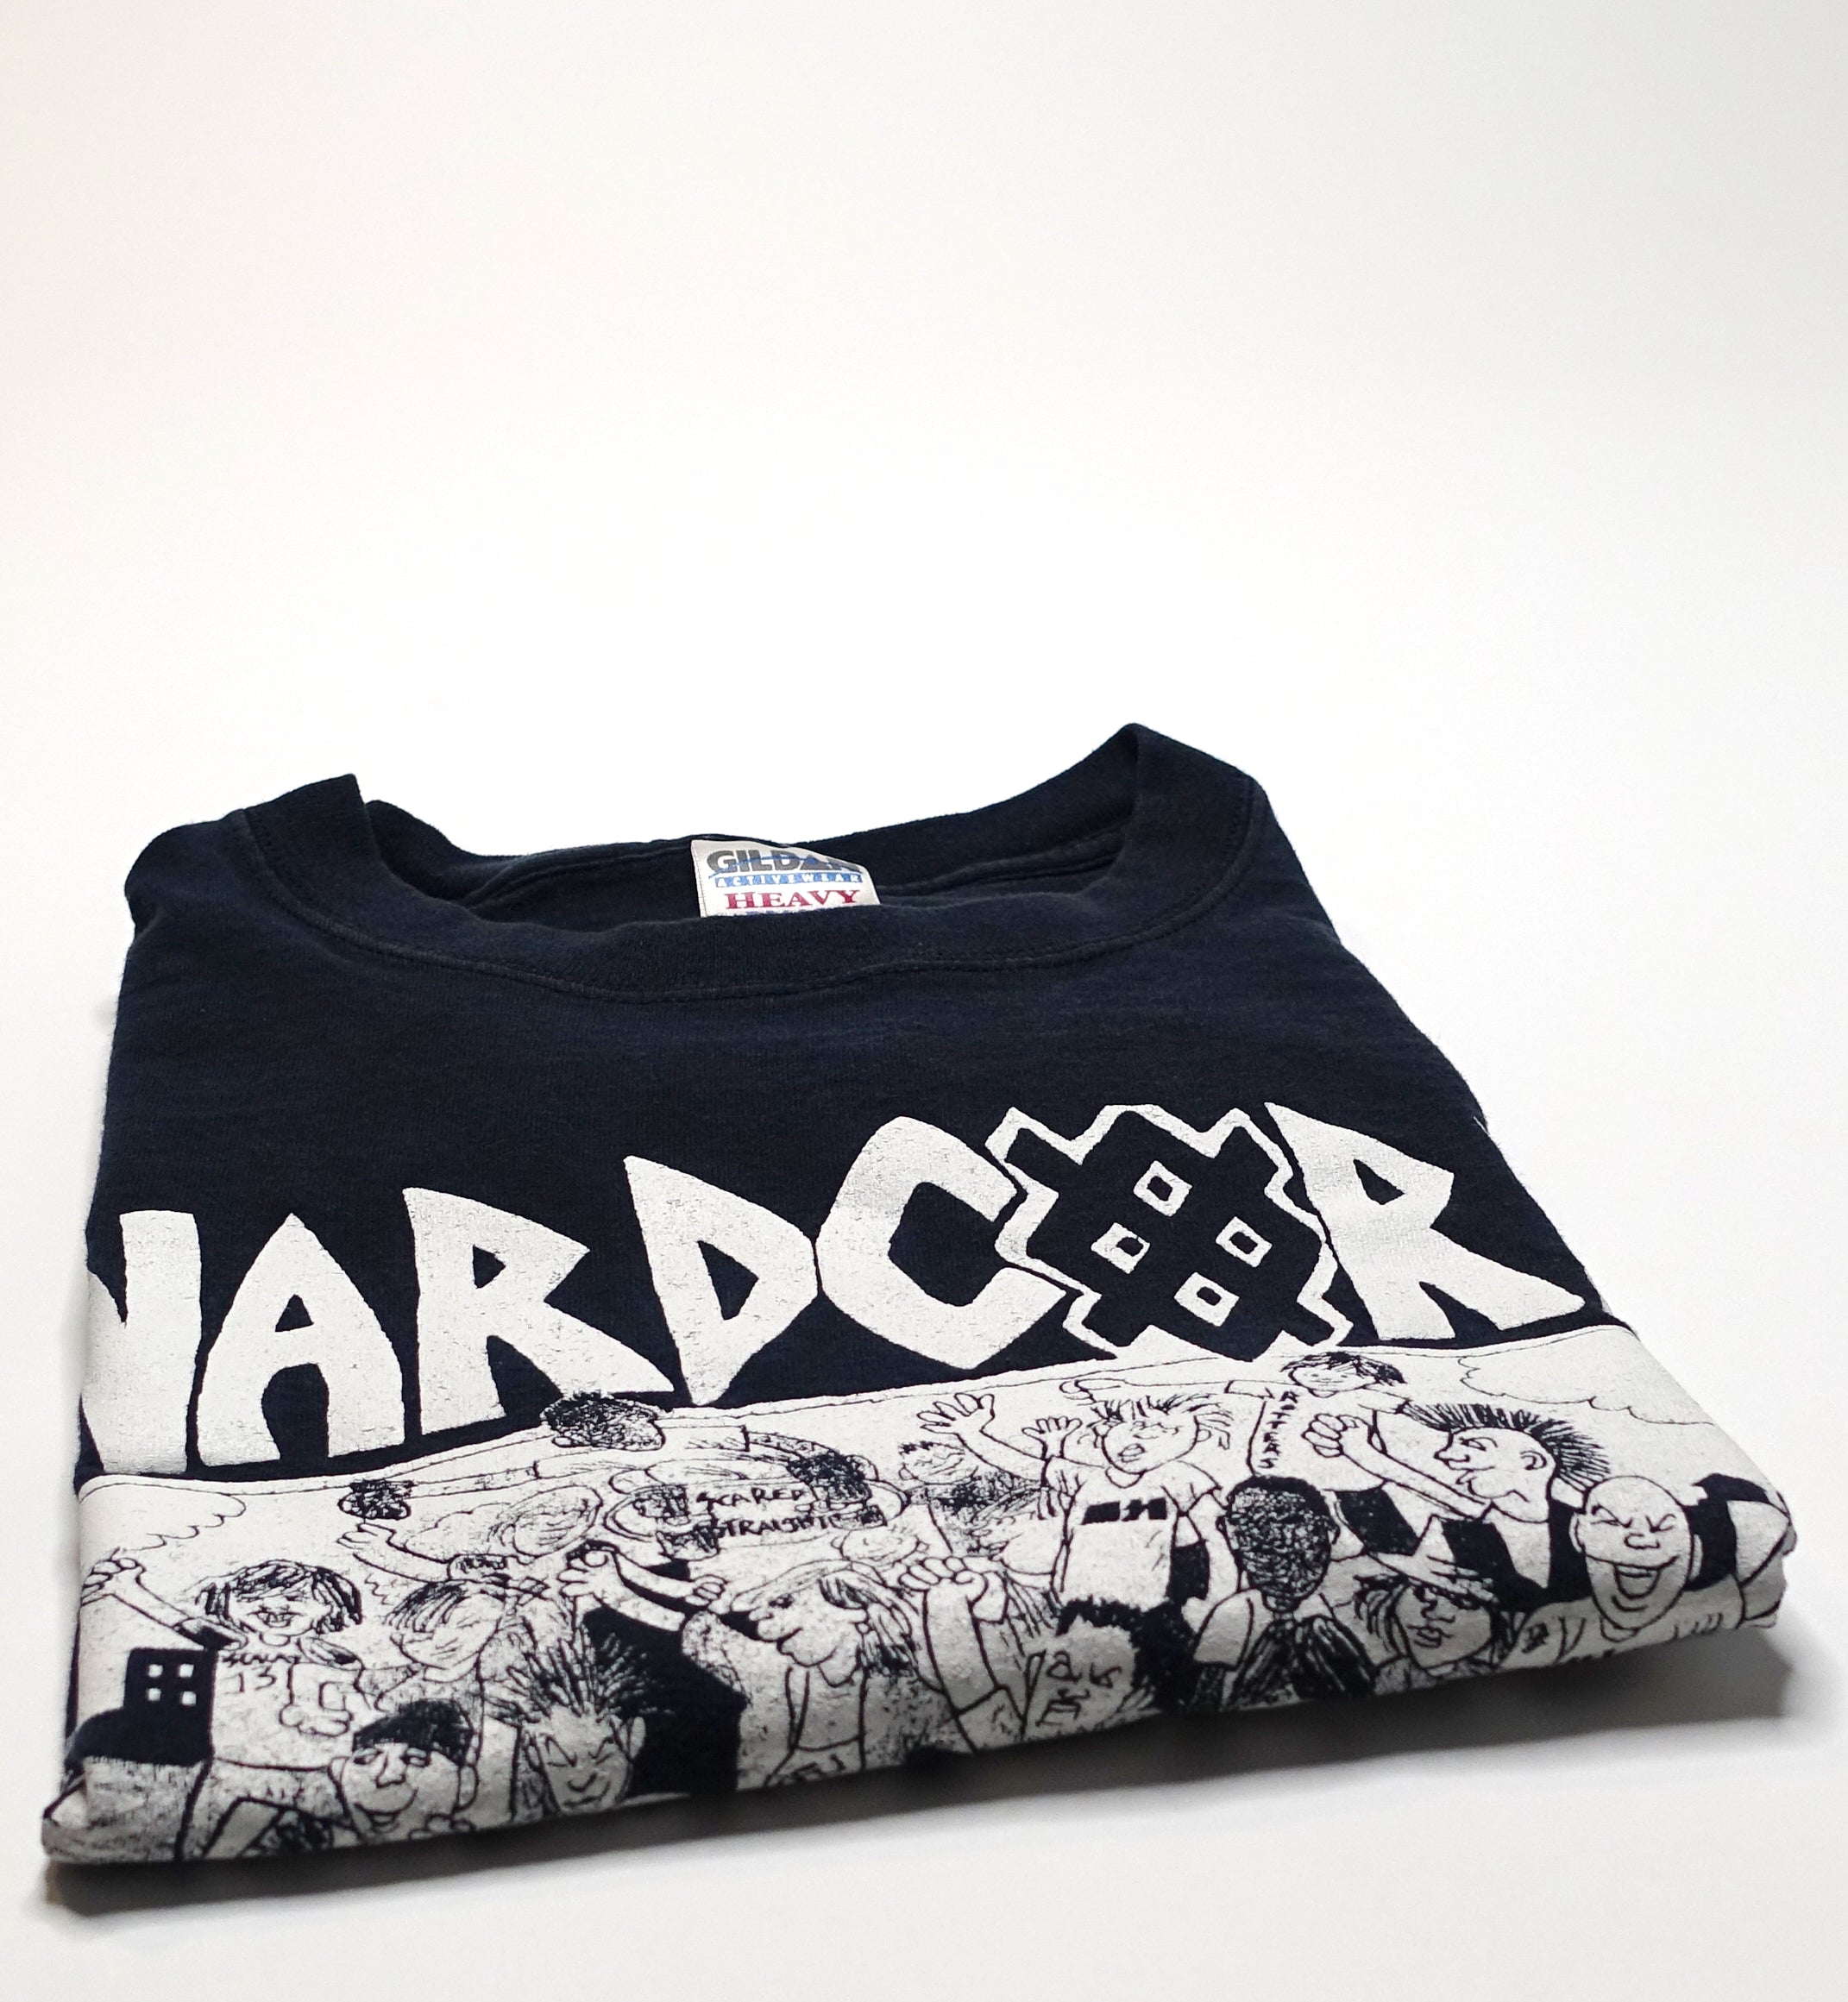 Mystic Records – Nardcore Shirt Size XL